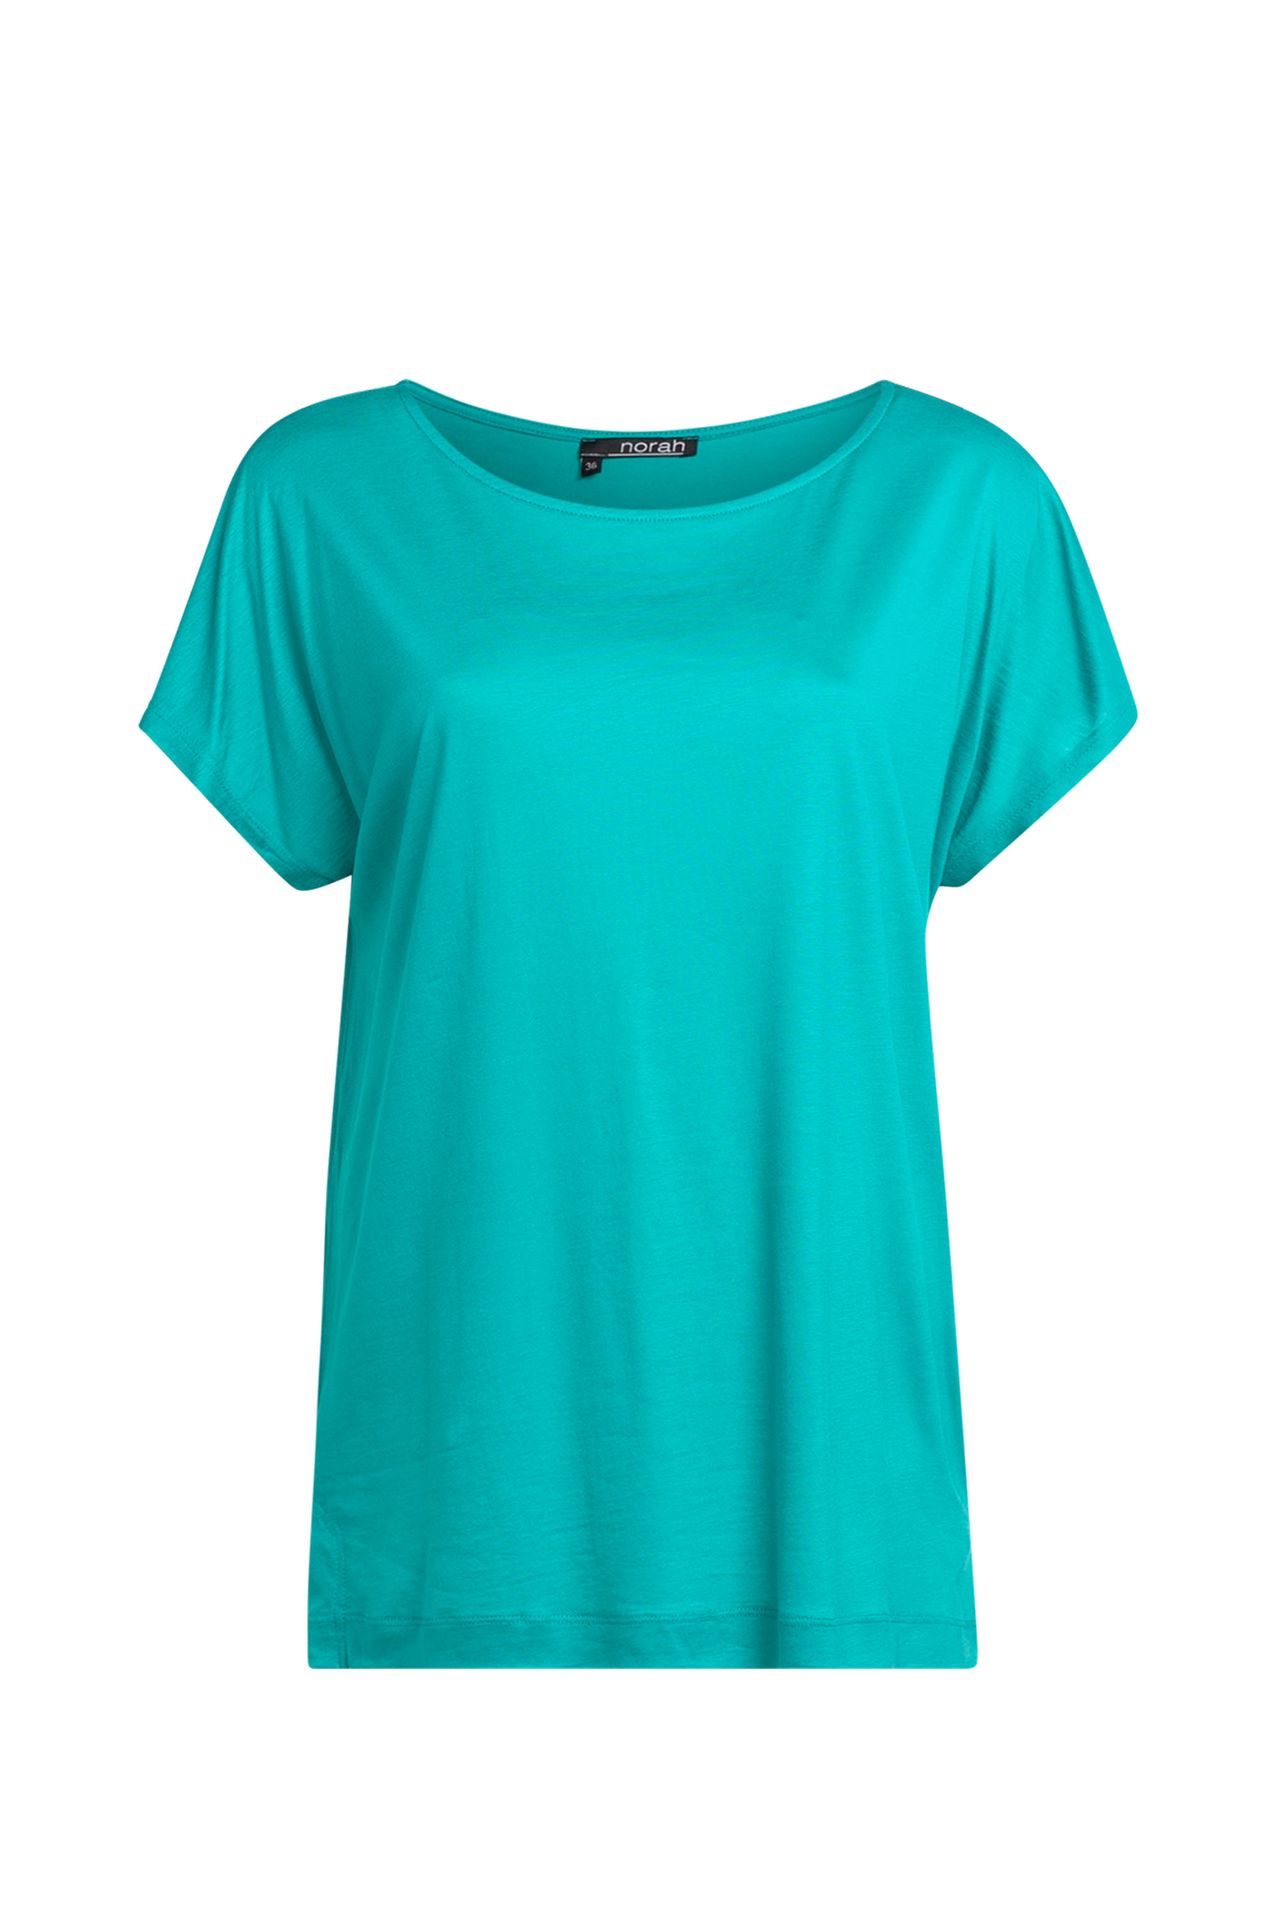 Norah Shirt blauw jade 209618-574